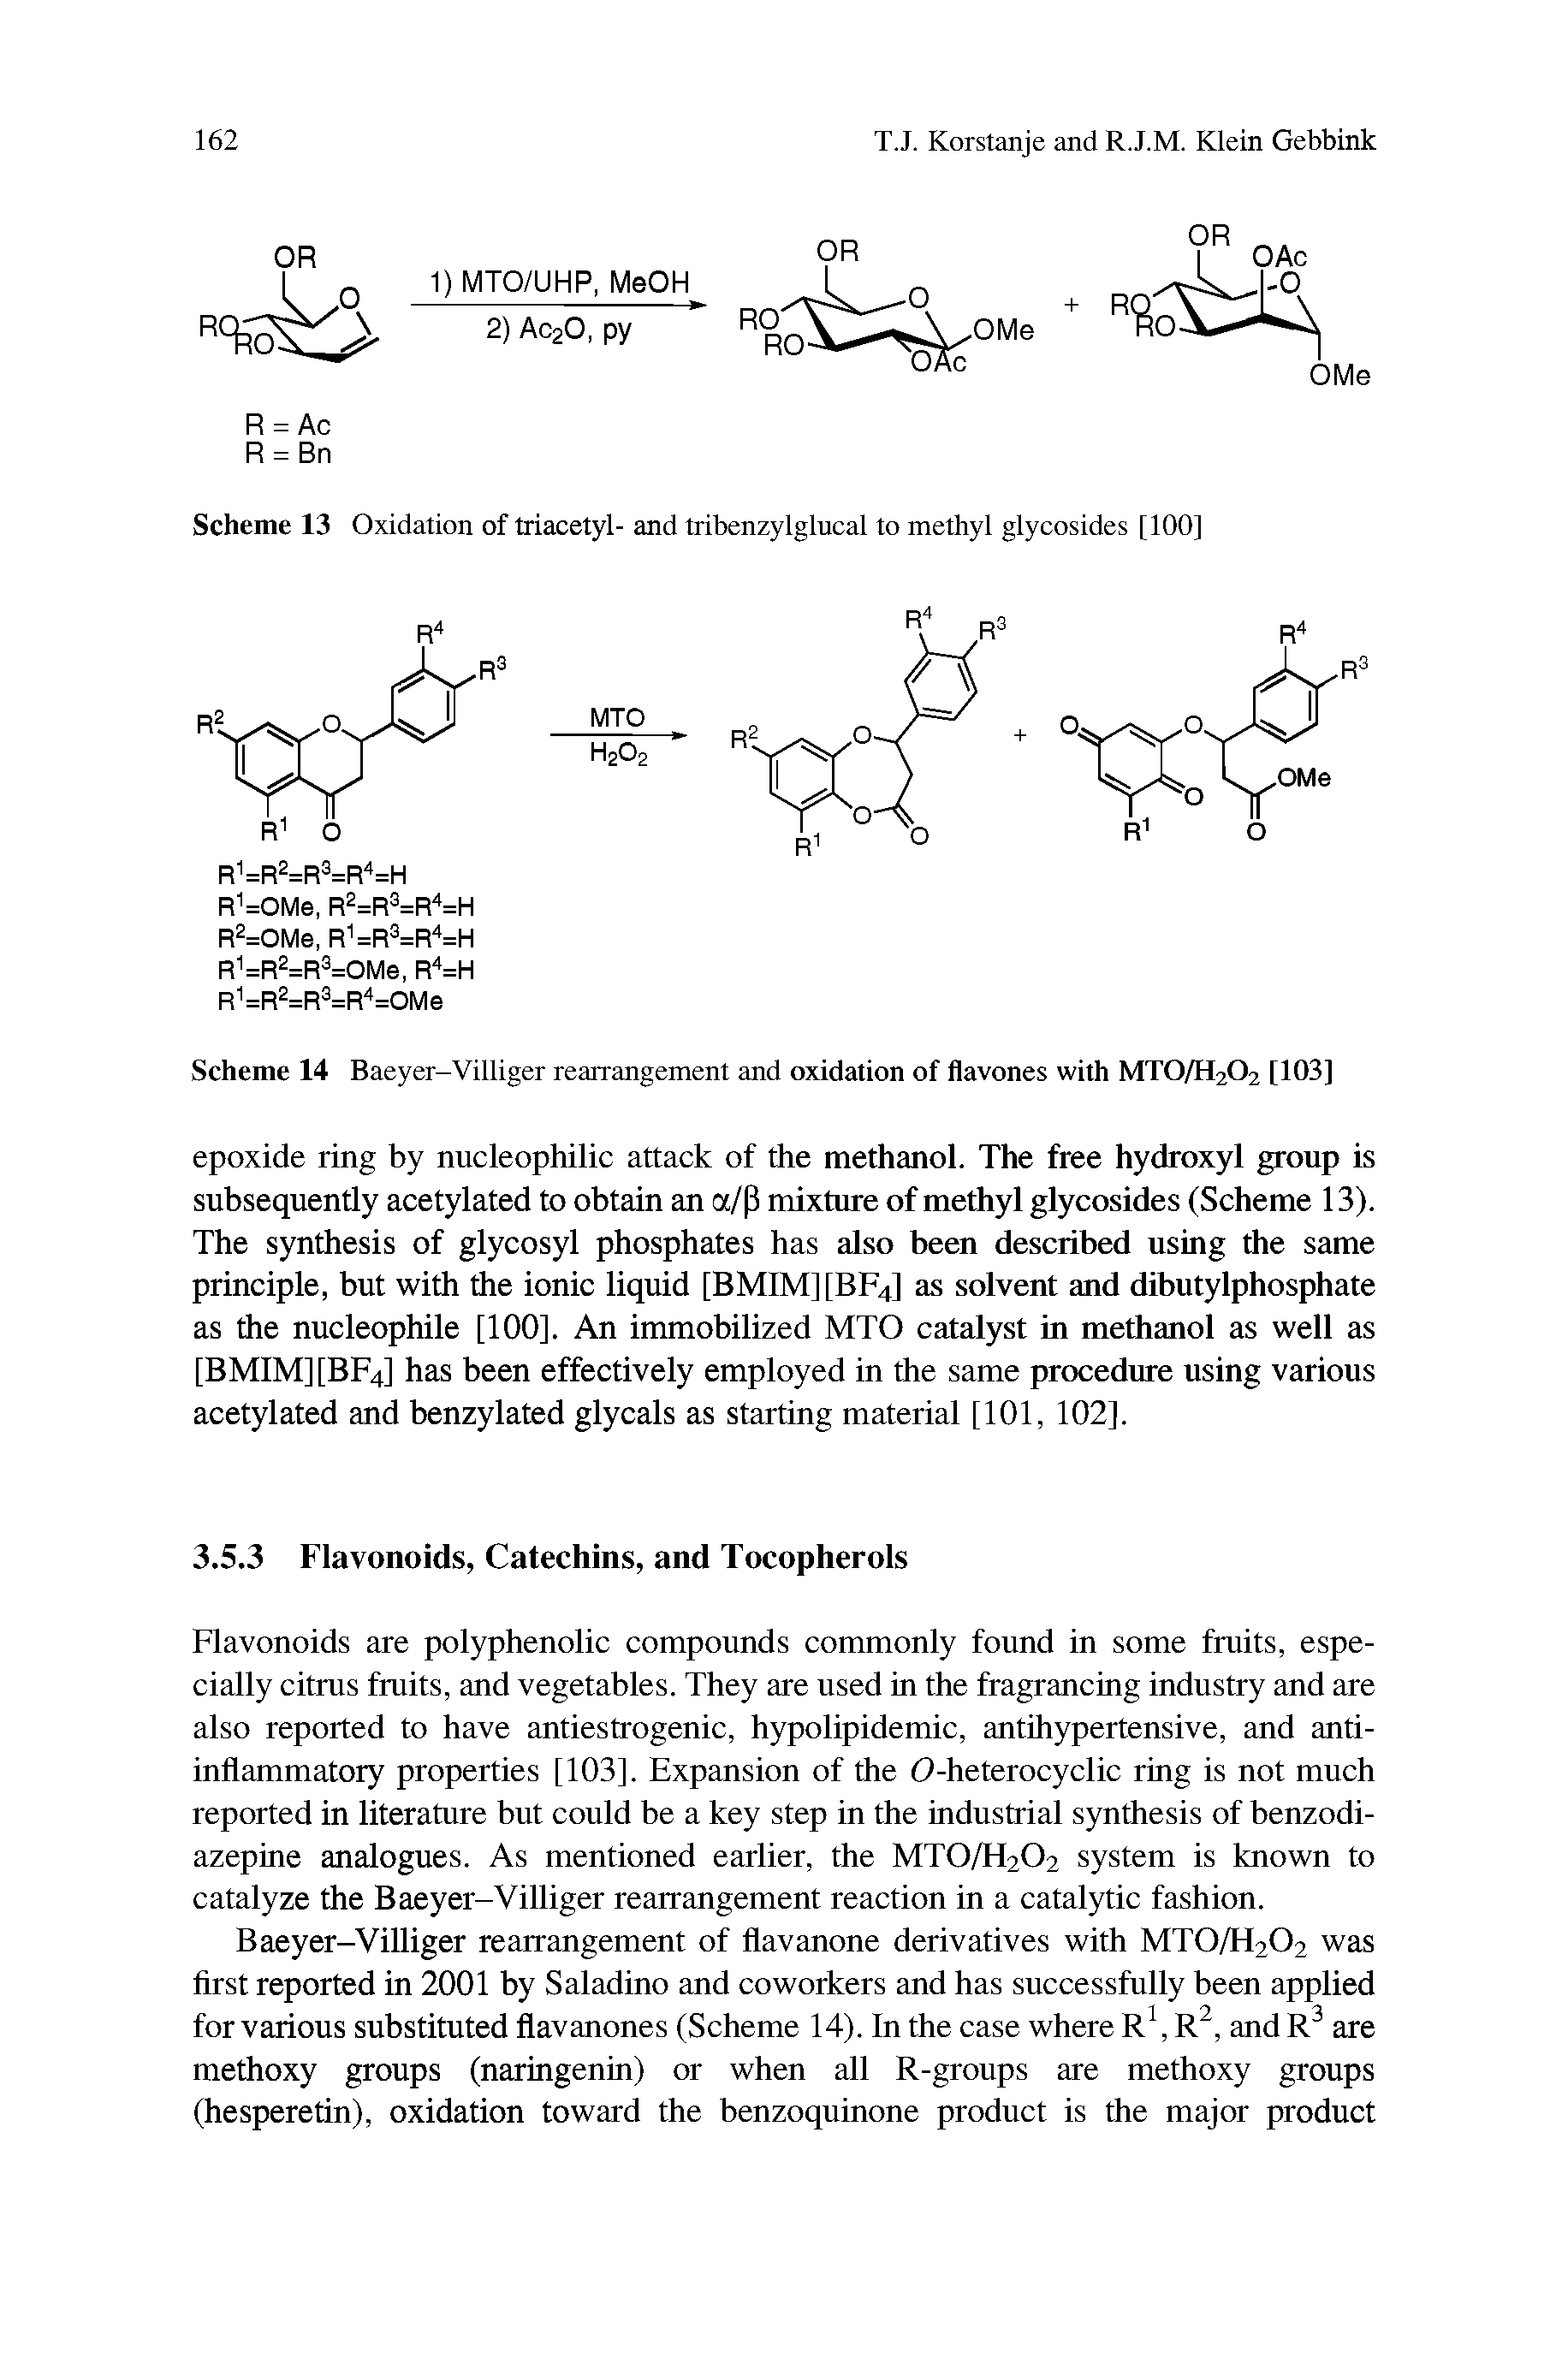 Scheme 14 Baeyer-Villiger rearrangement and oxidation of flavones with MT0/H202 [103]...